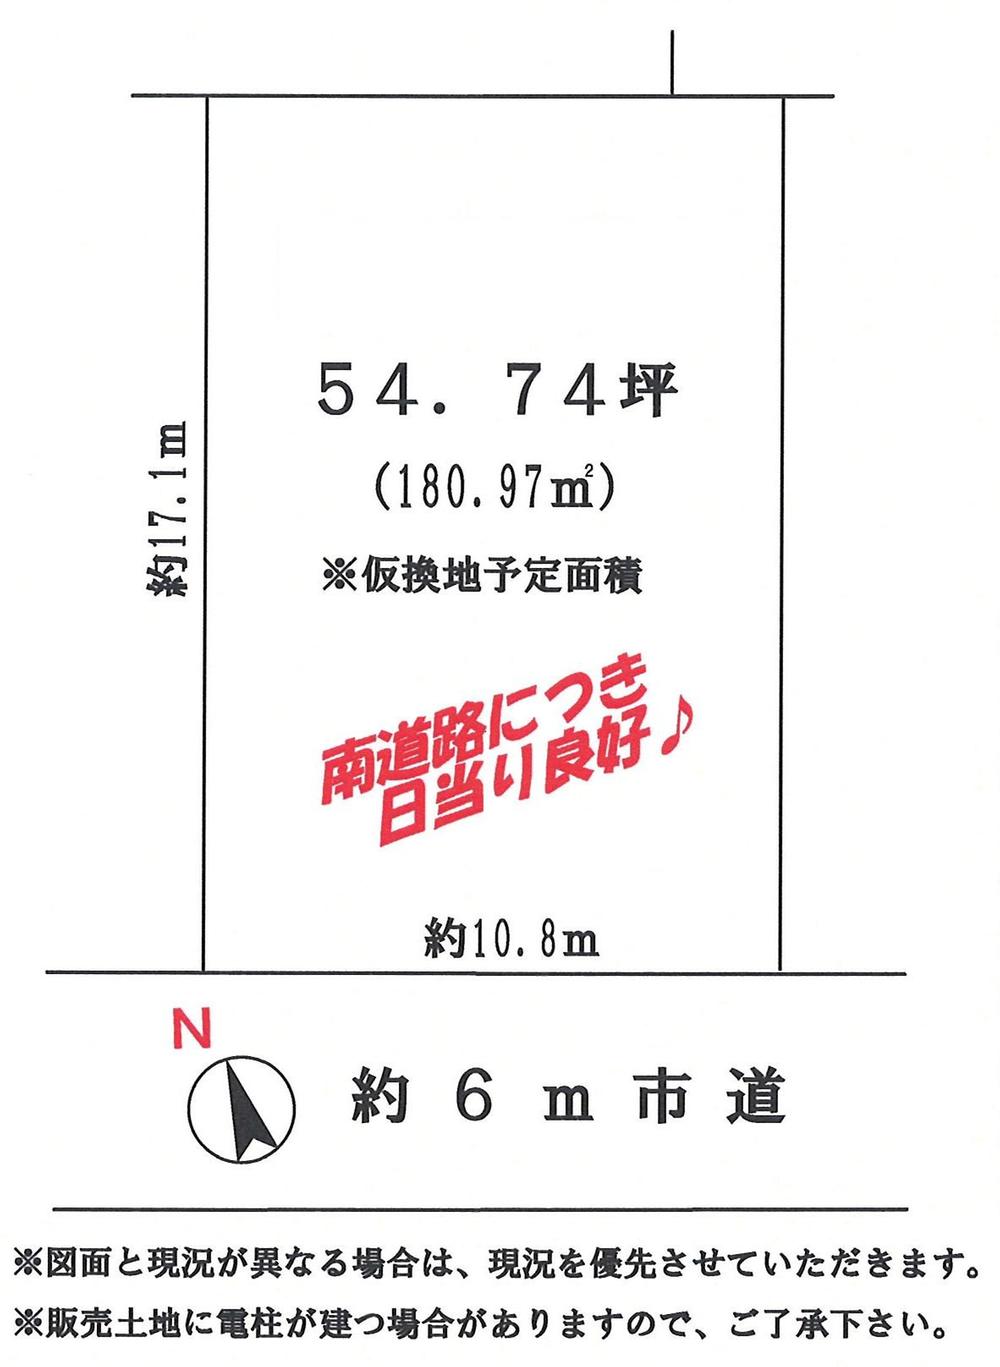 Compartment figure. Land price 18.5 million yen, Land area 180.97 sq m